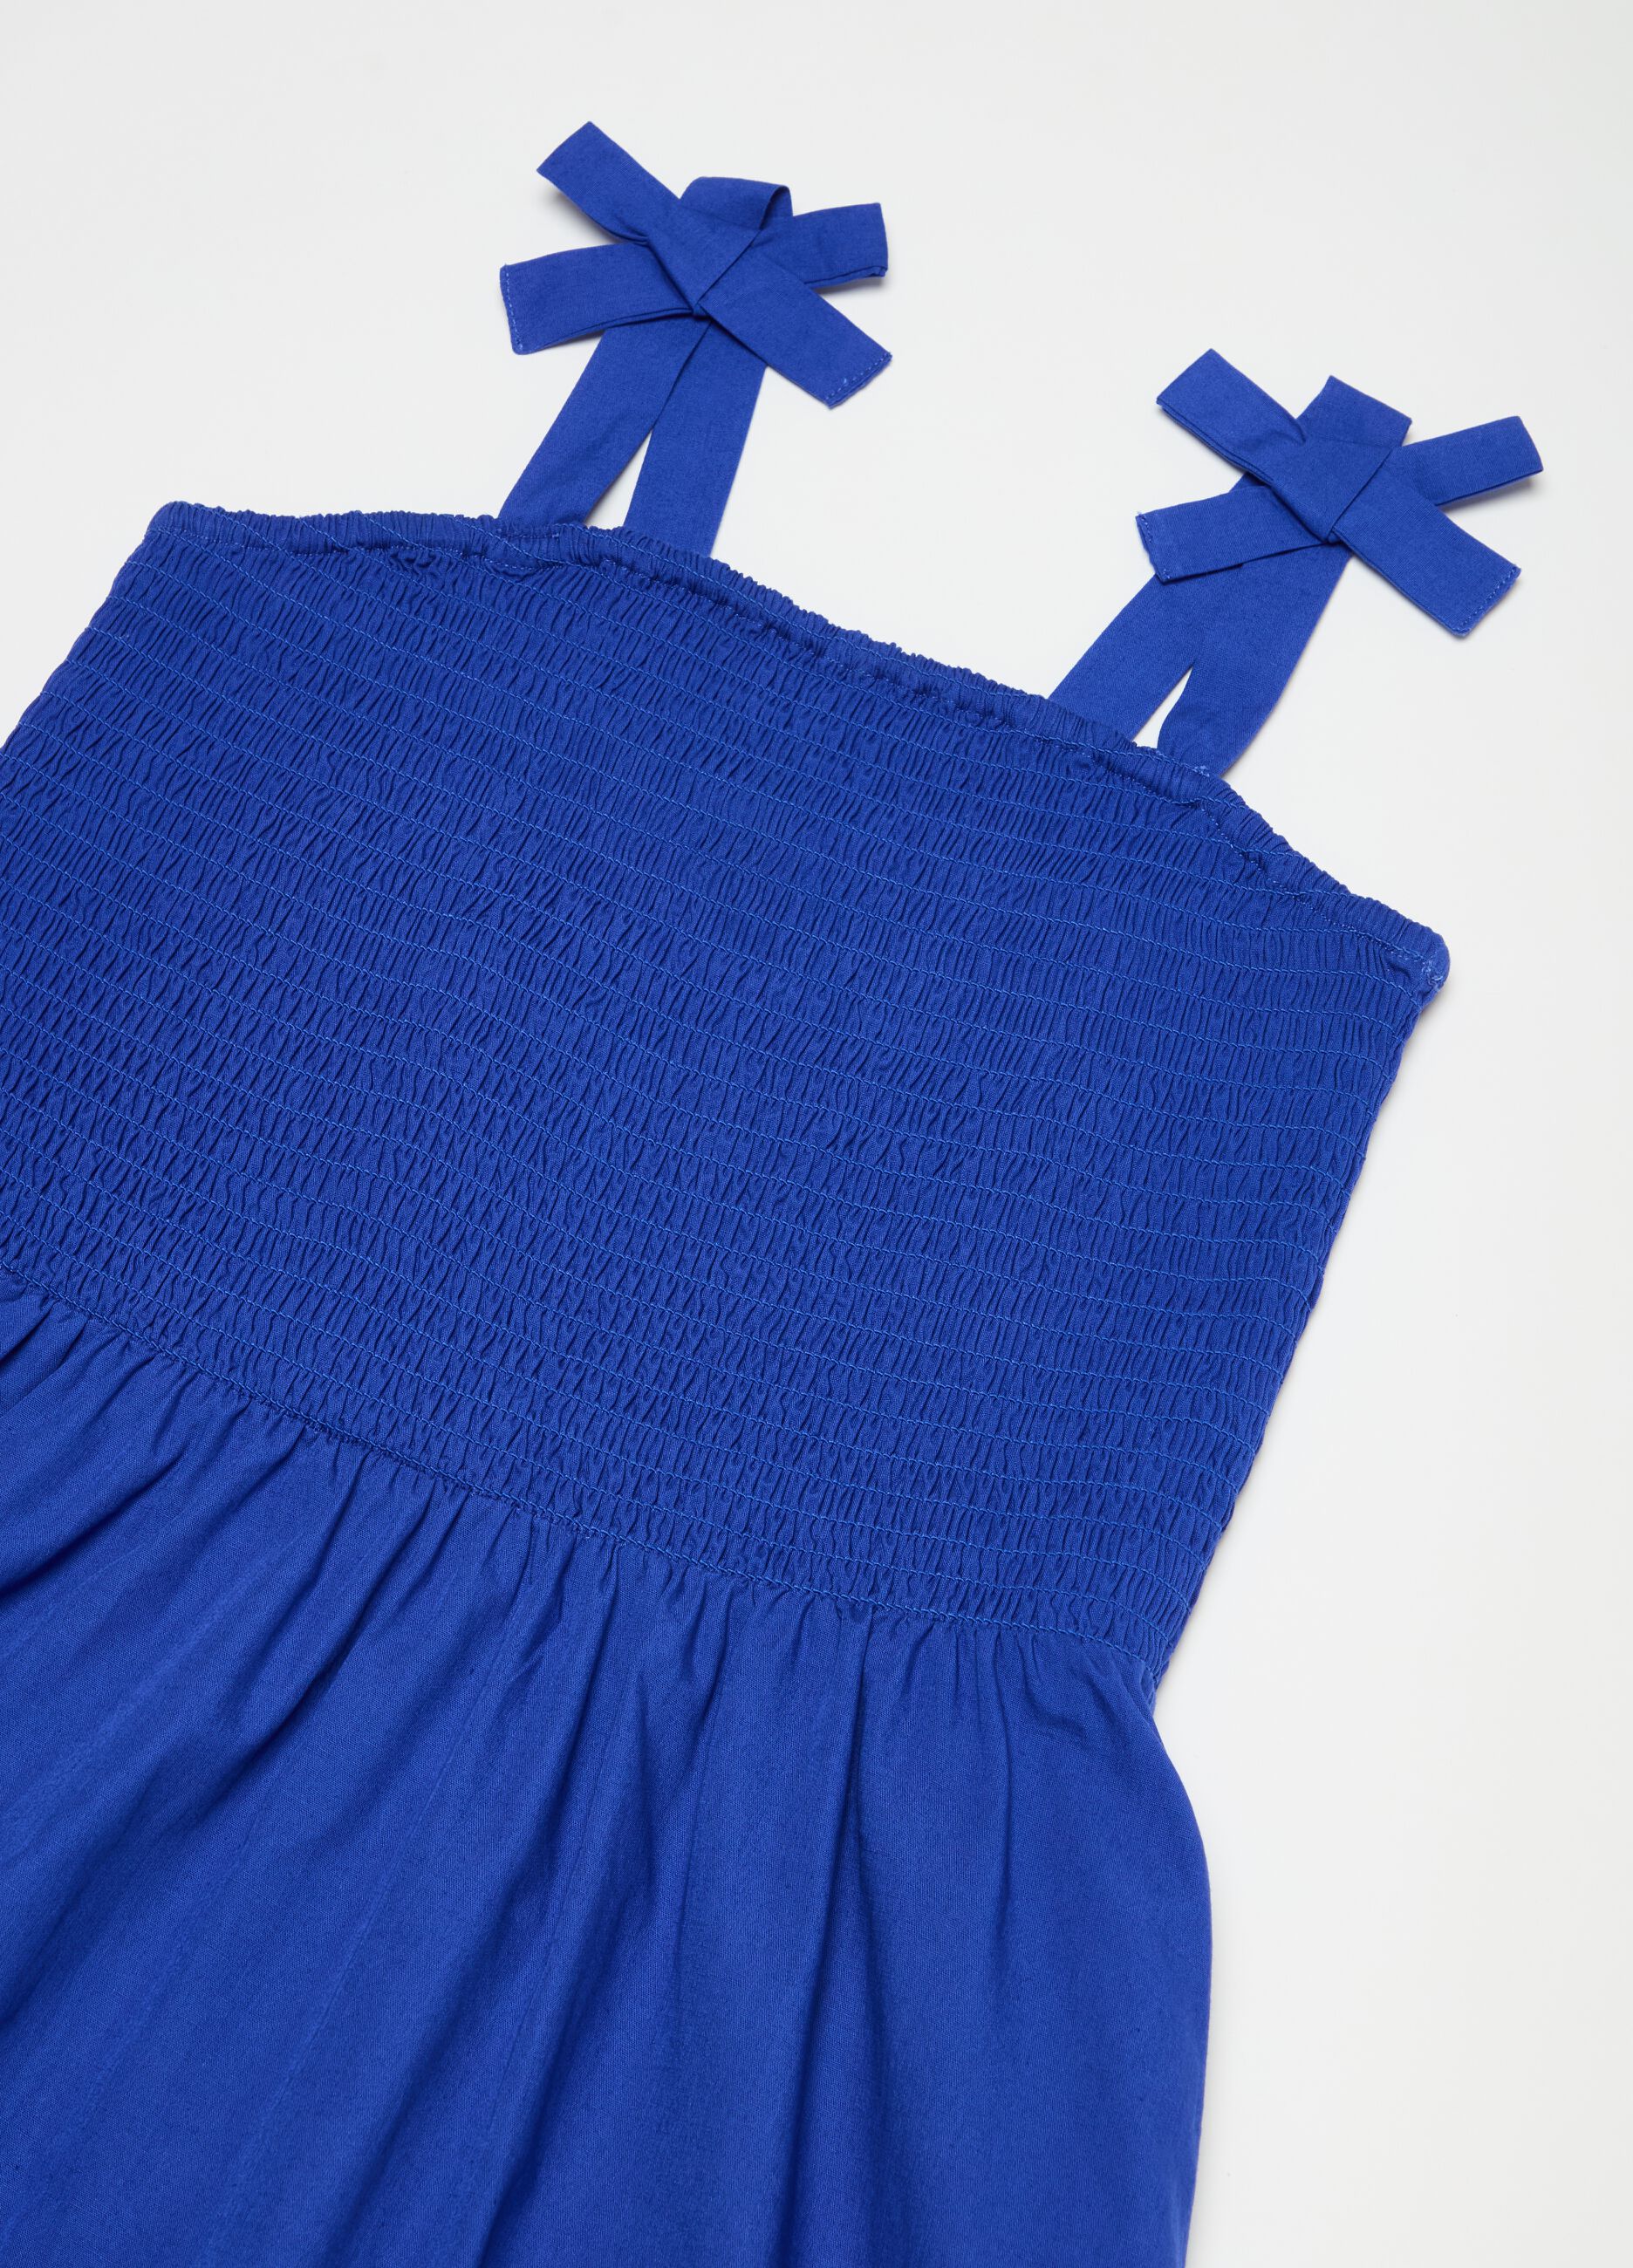 Sleeveless dress with smock stitch